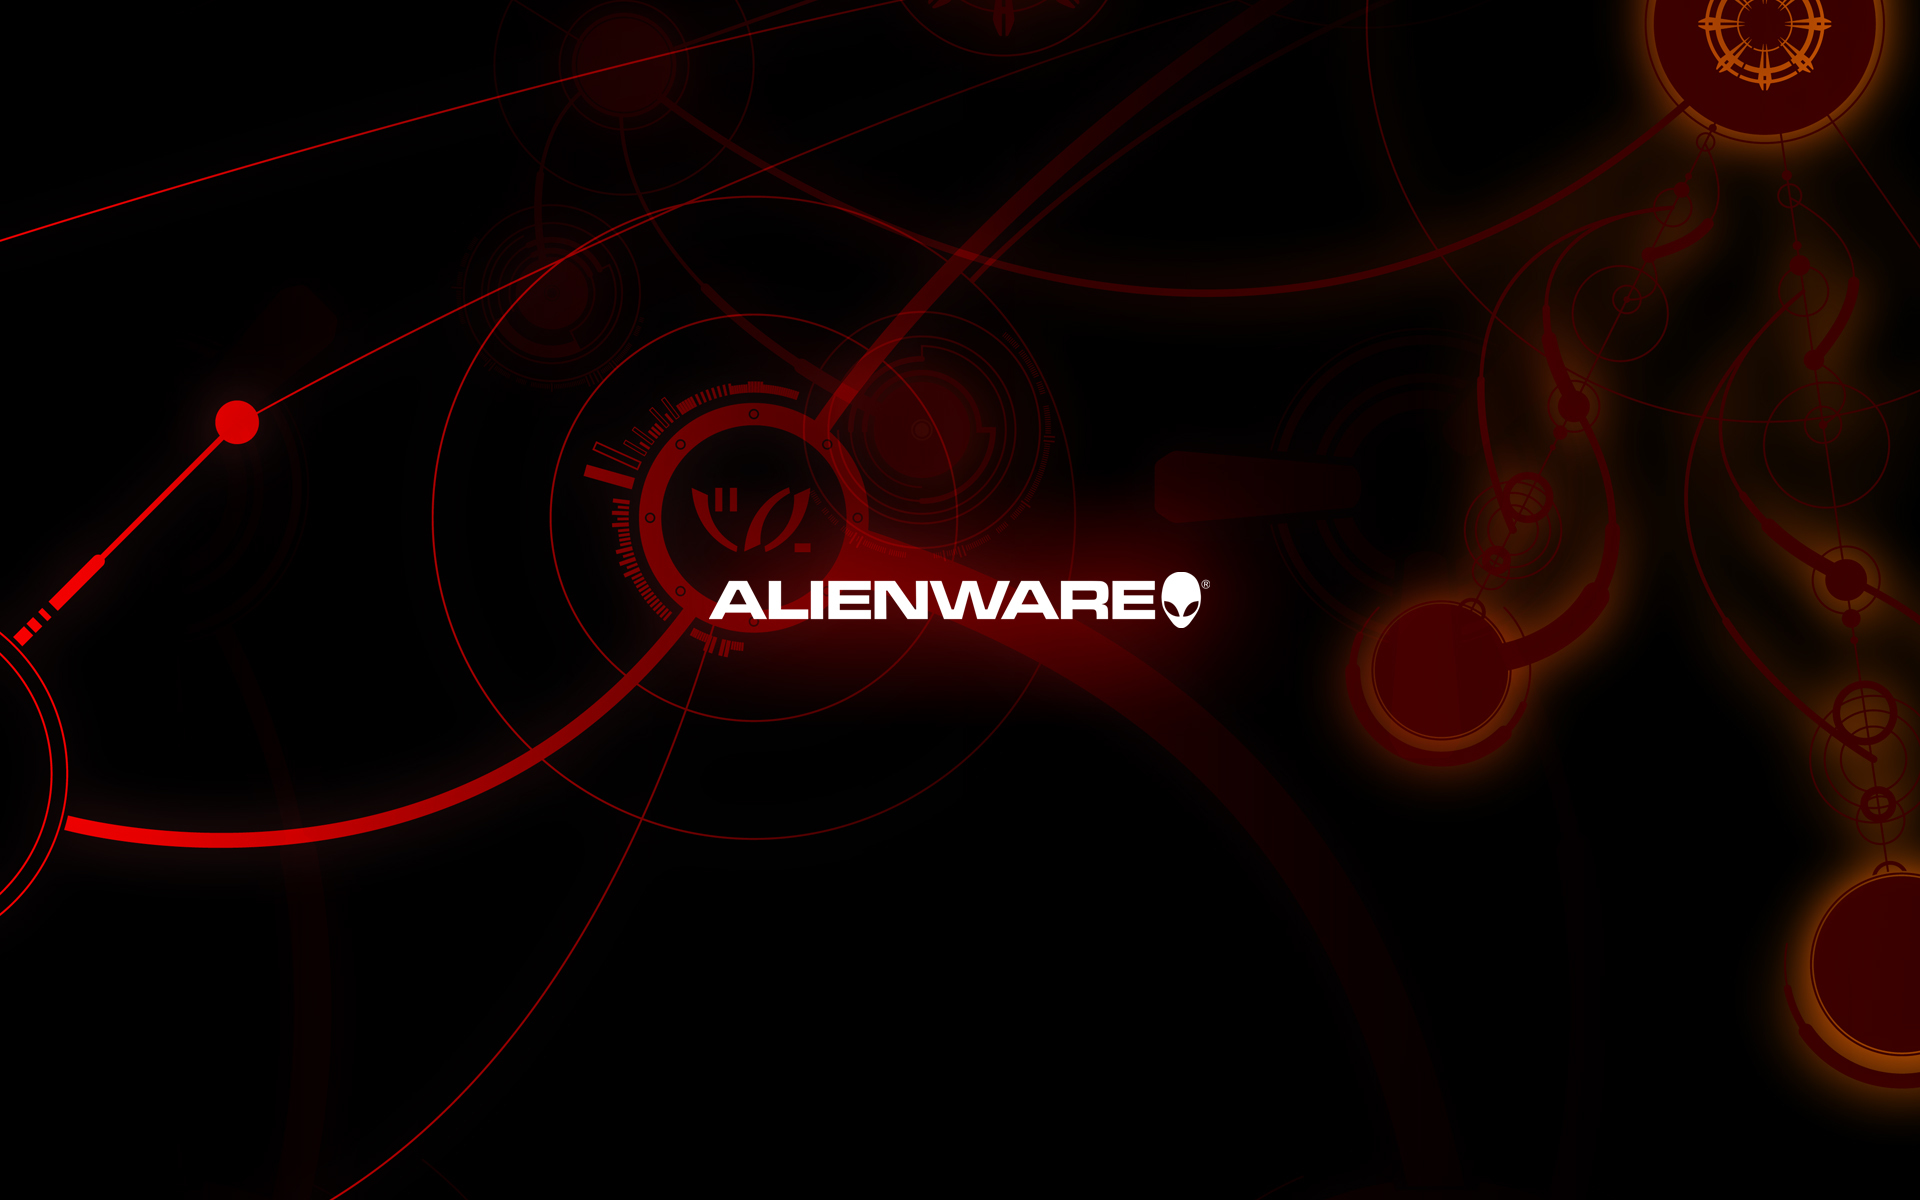 Alienware Wallpaper Hd Red